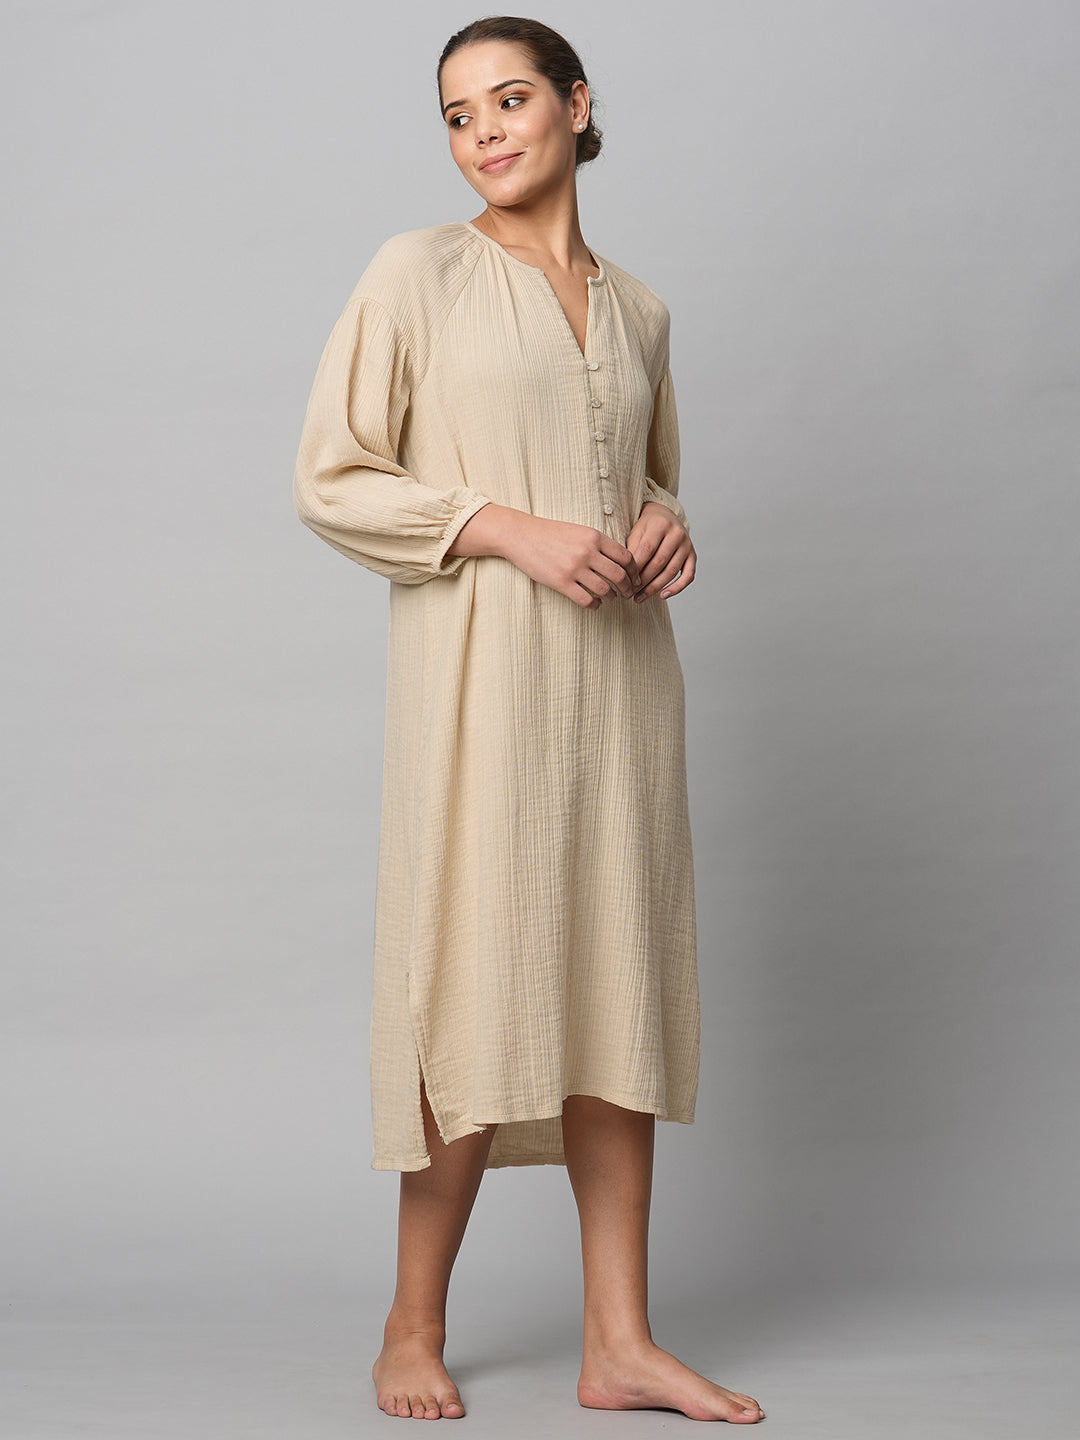 Night Dress Women Sleepwear Cotton Women Night Gowns Simple Design  Maternity Nightgown - AliExpress